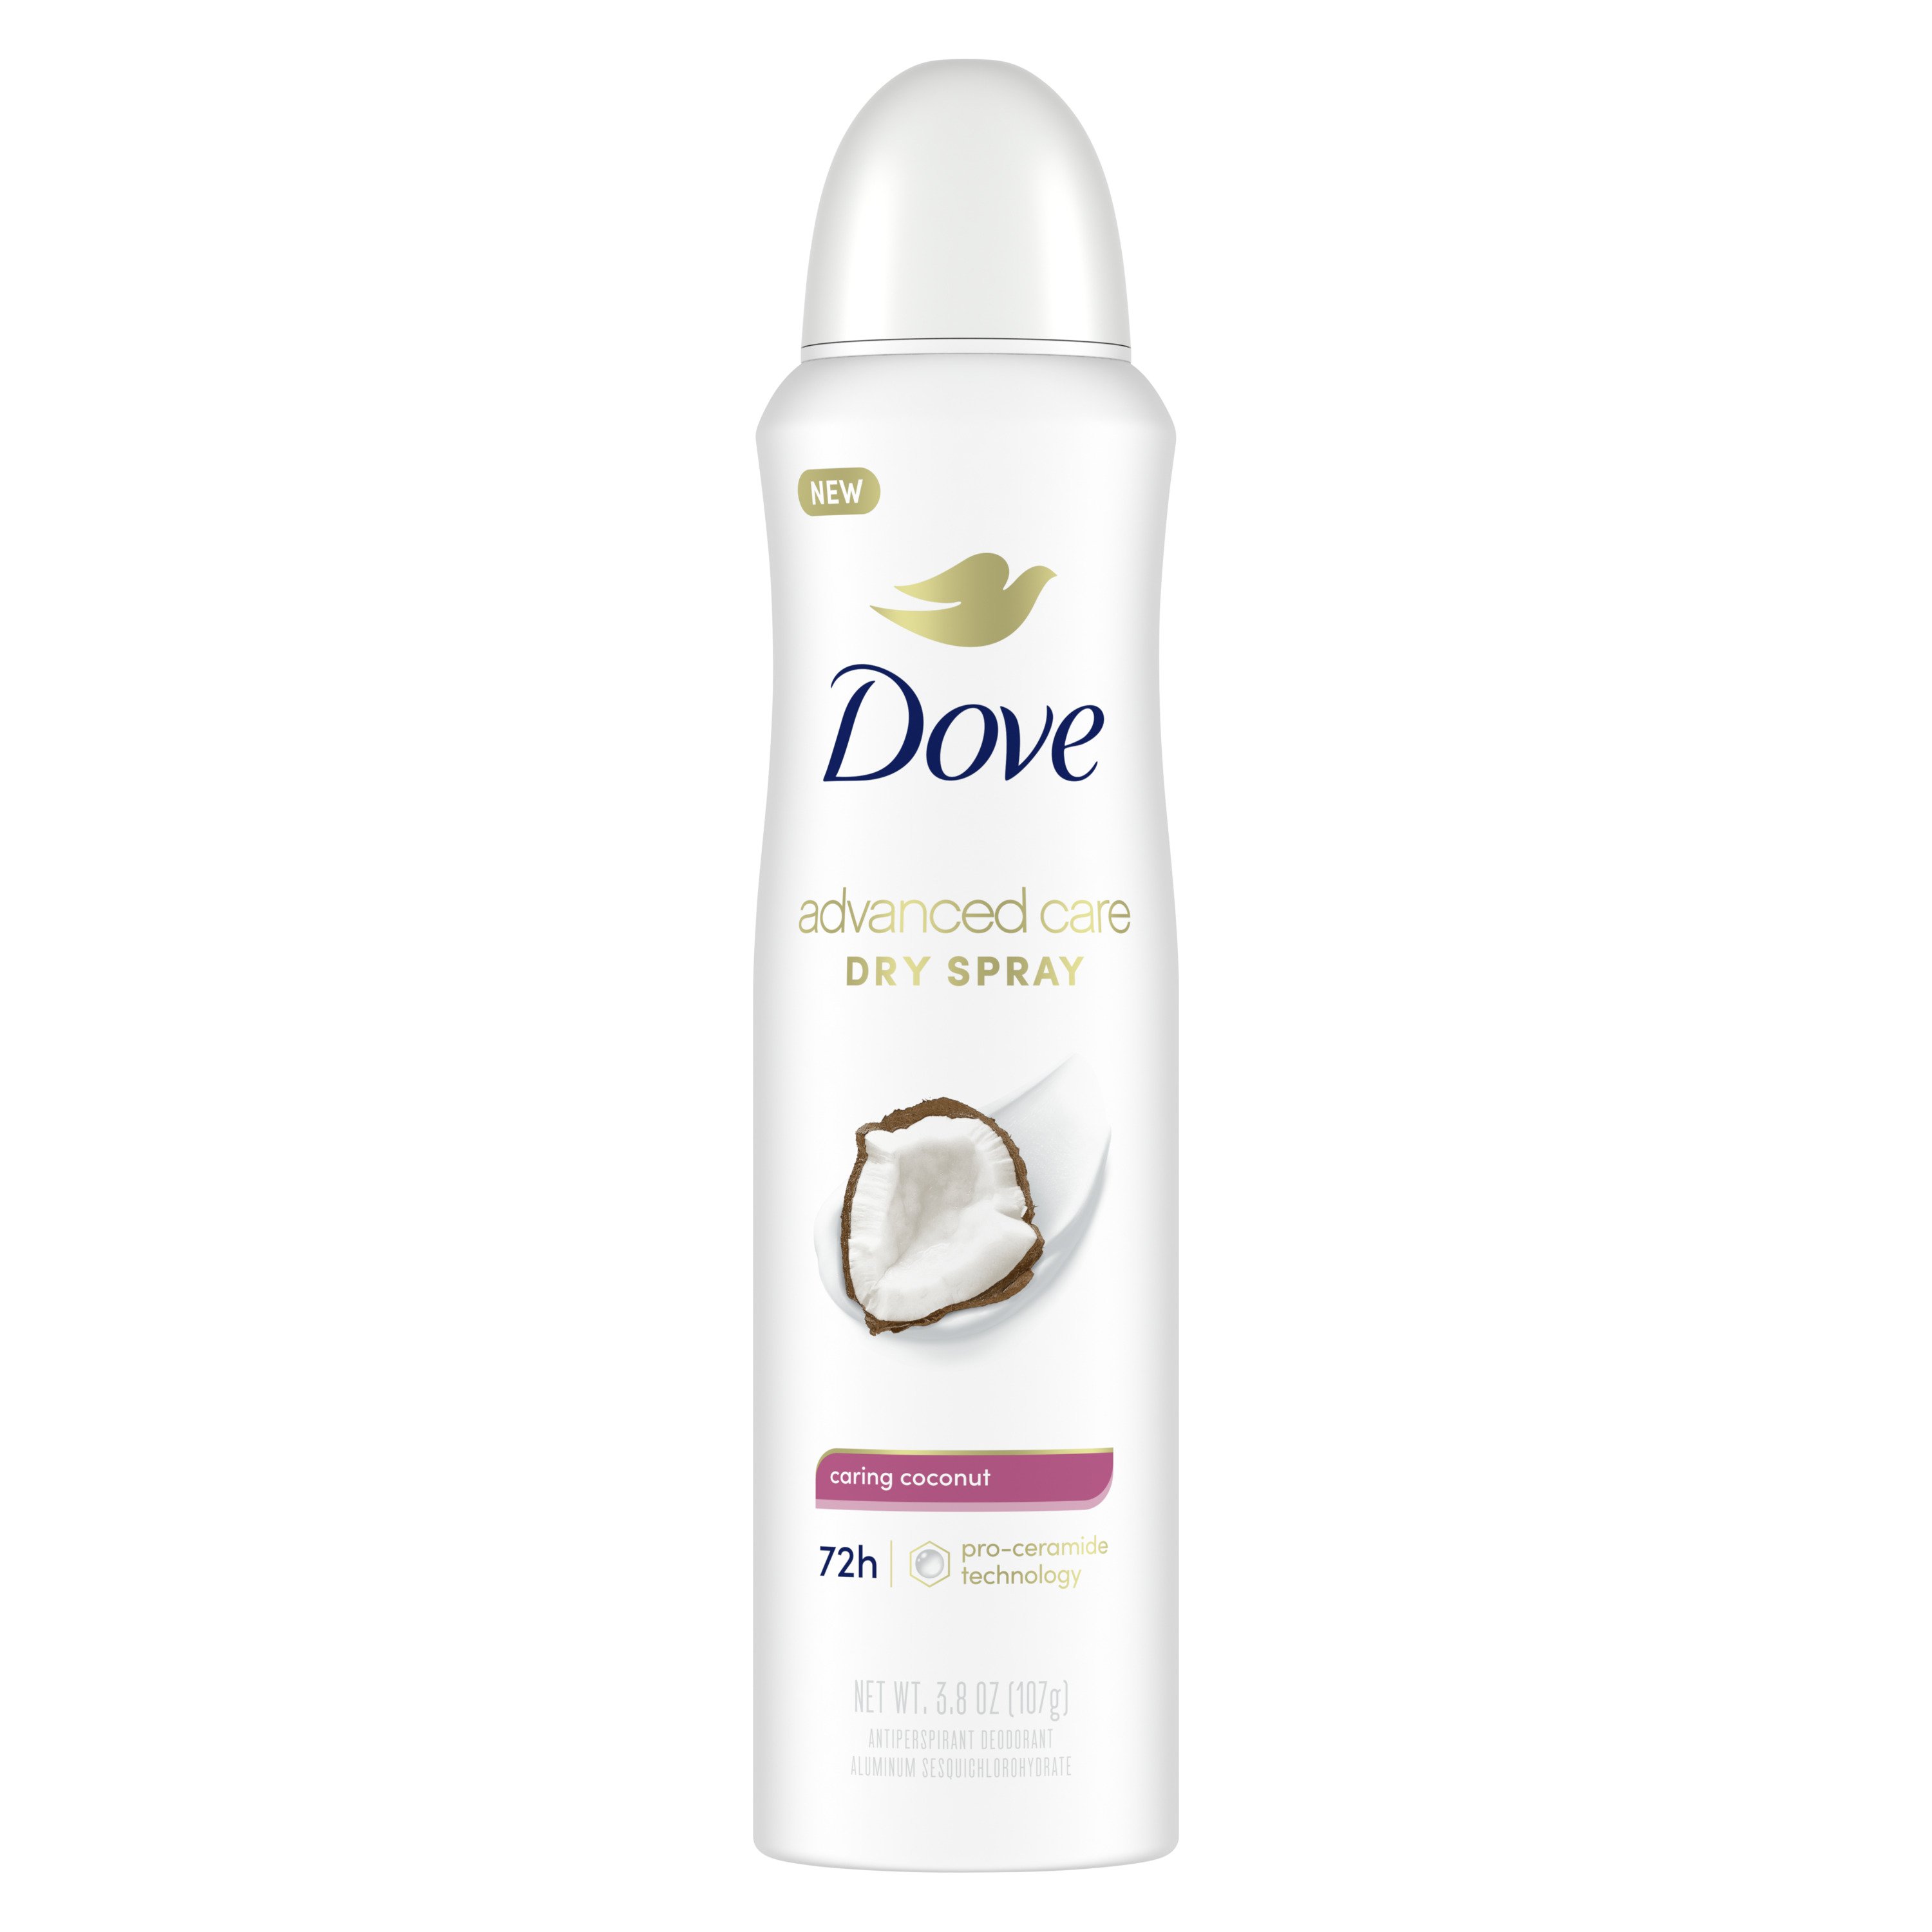 Dove Advanced Care Dry Antiperspirant Deodorant Caring Coconut - Shop Deodorant & at H-E-B